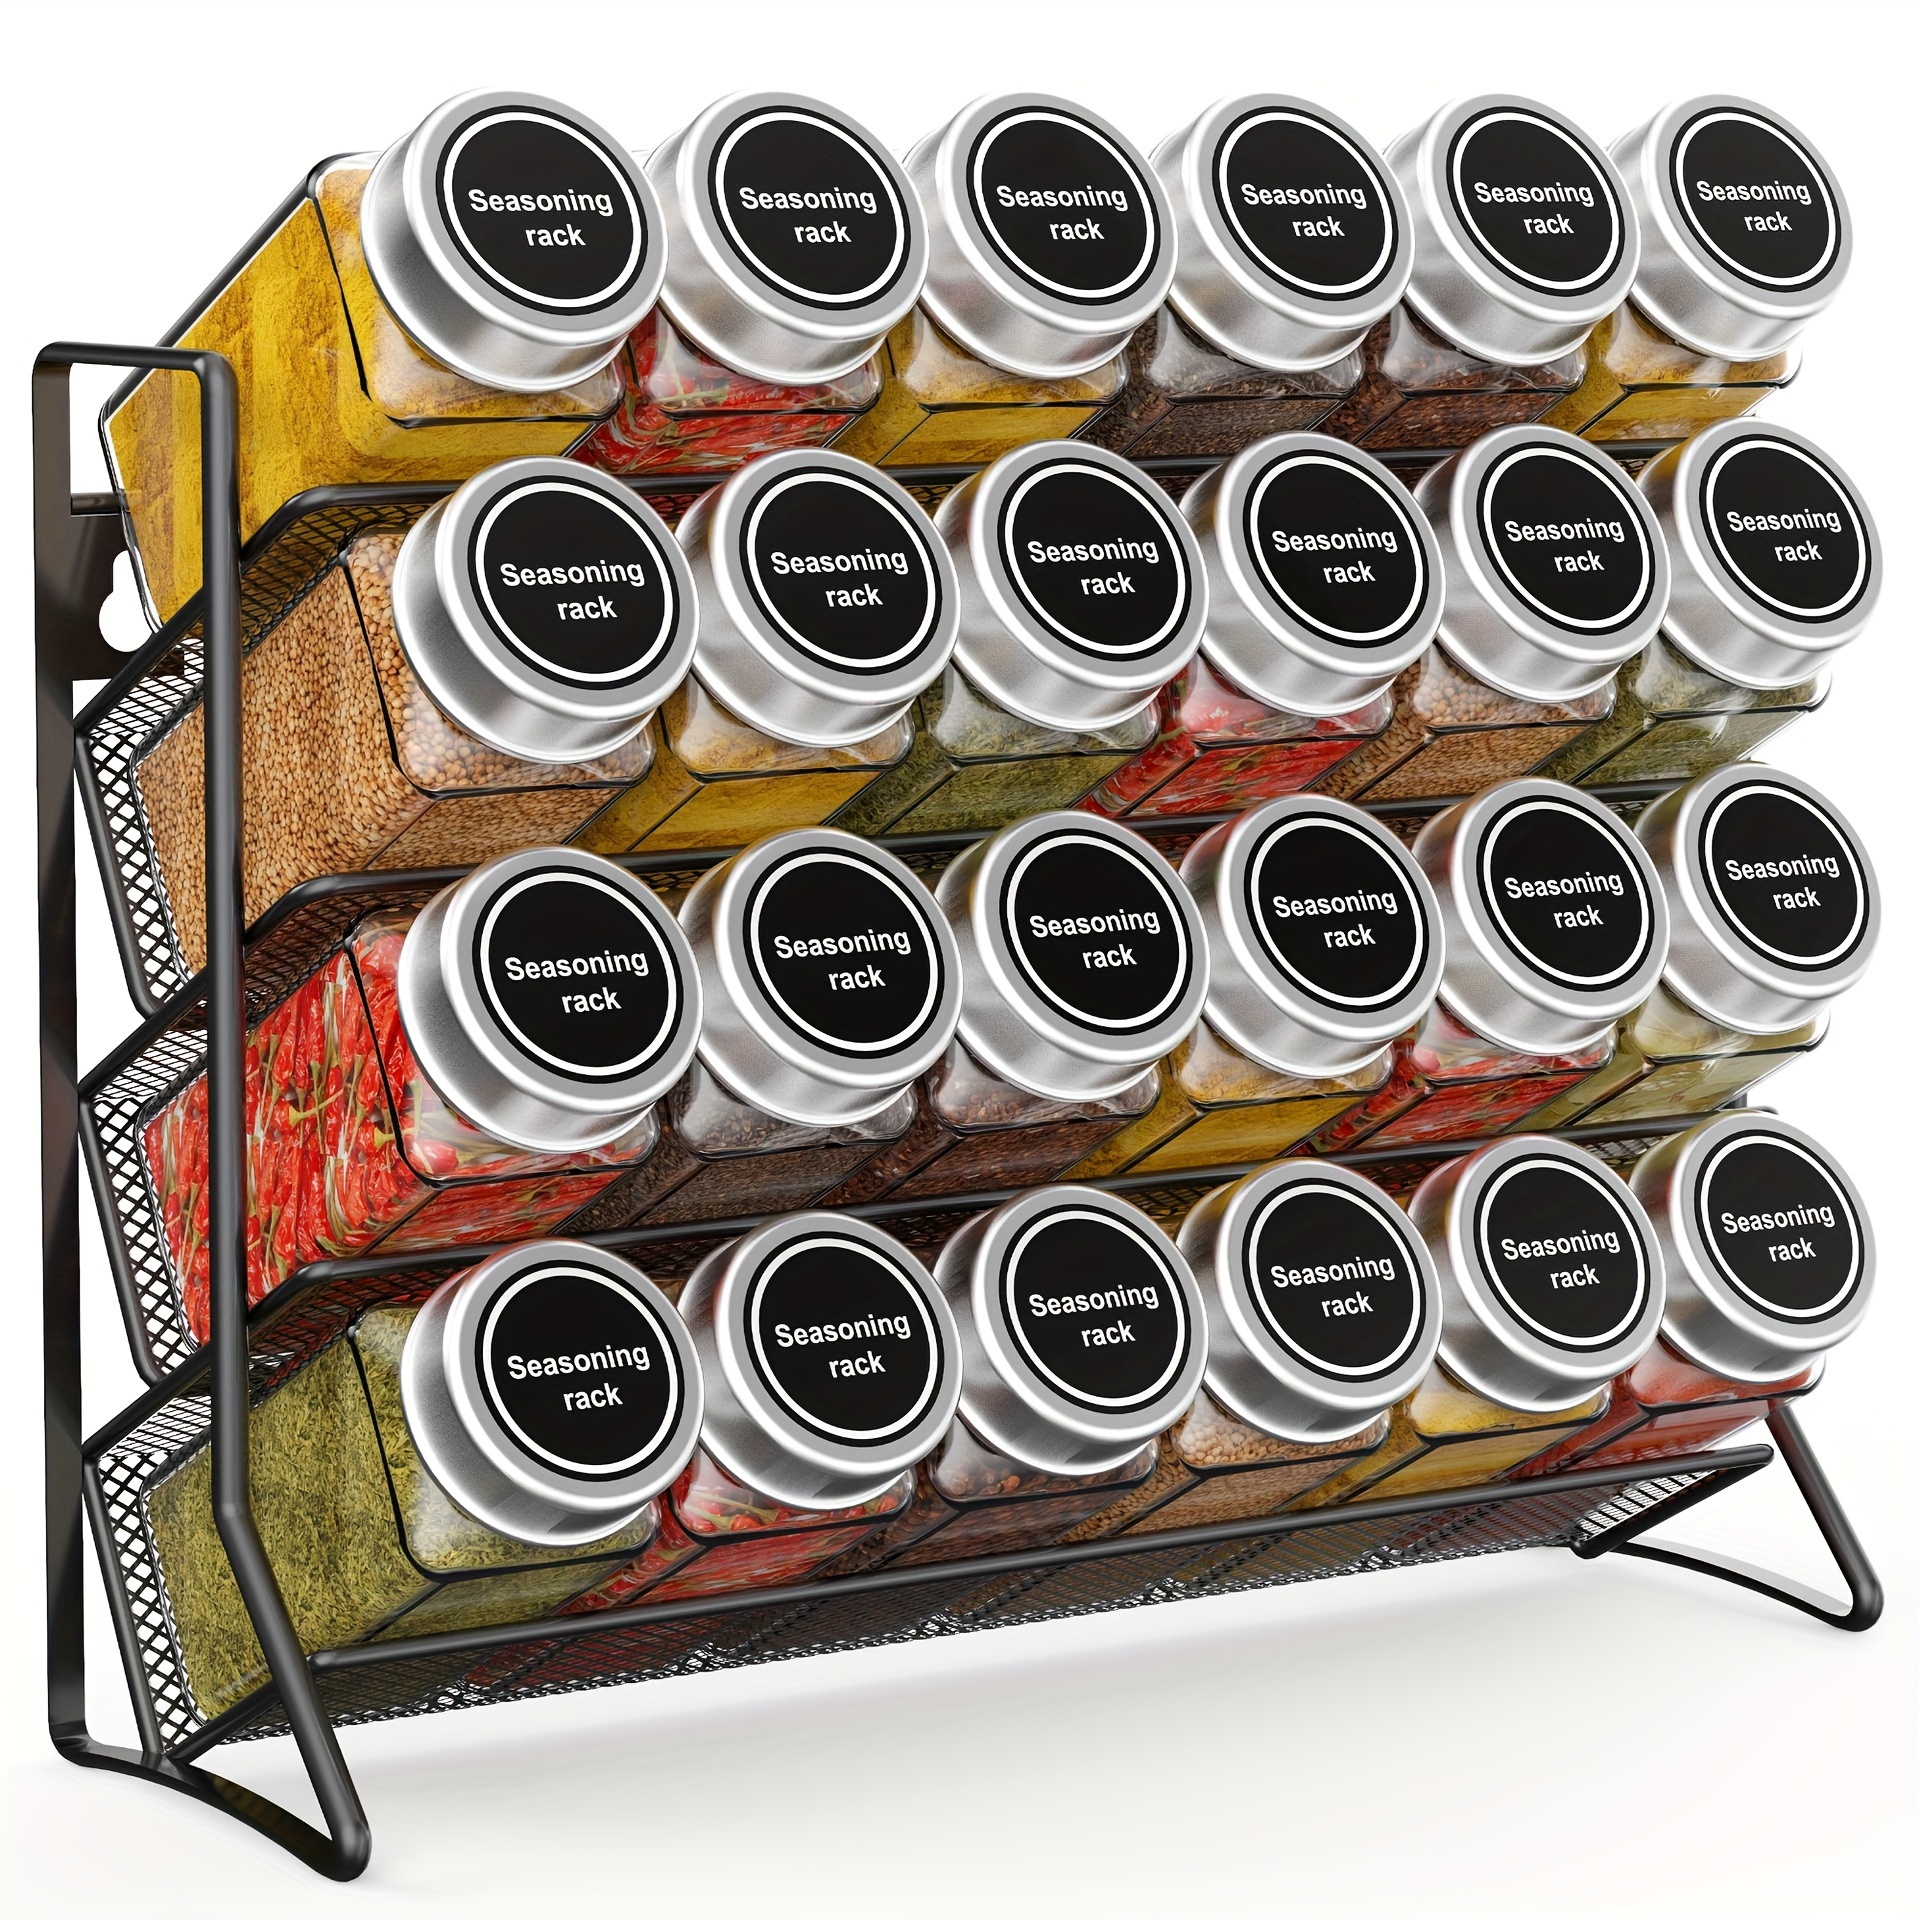 

1pc Spice Rack, 4-tiers Spice Jars Storage Organizer, Multifunctional Durable Metal Storage Holder, For Kitchen Countertop And Shelf, Kitchen Organizers And Storage, Kitchen Accessories